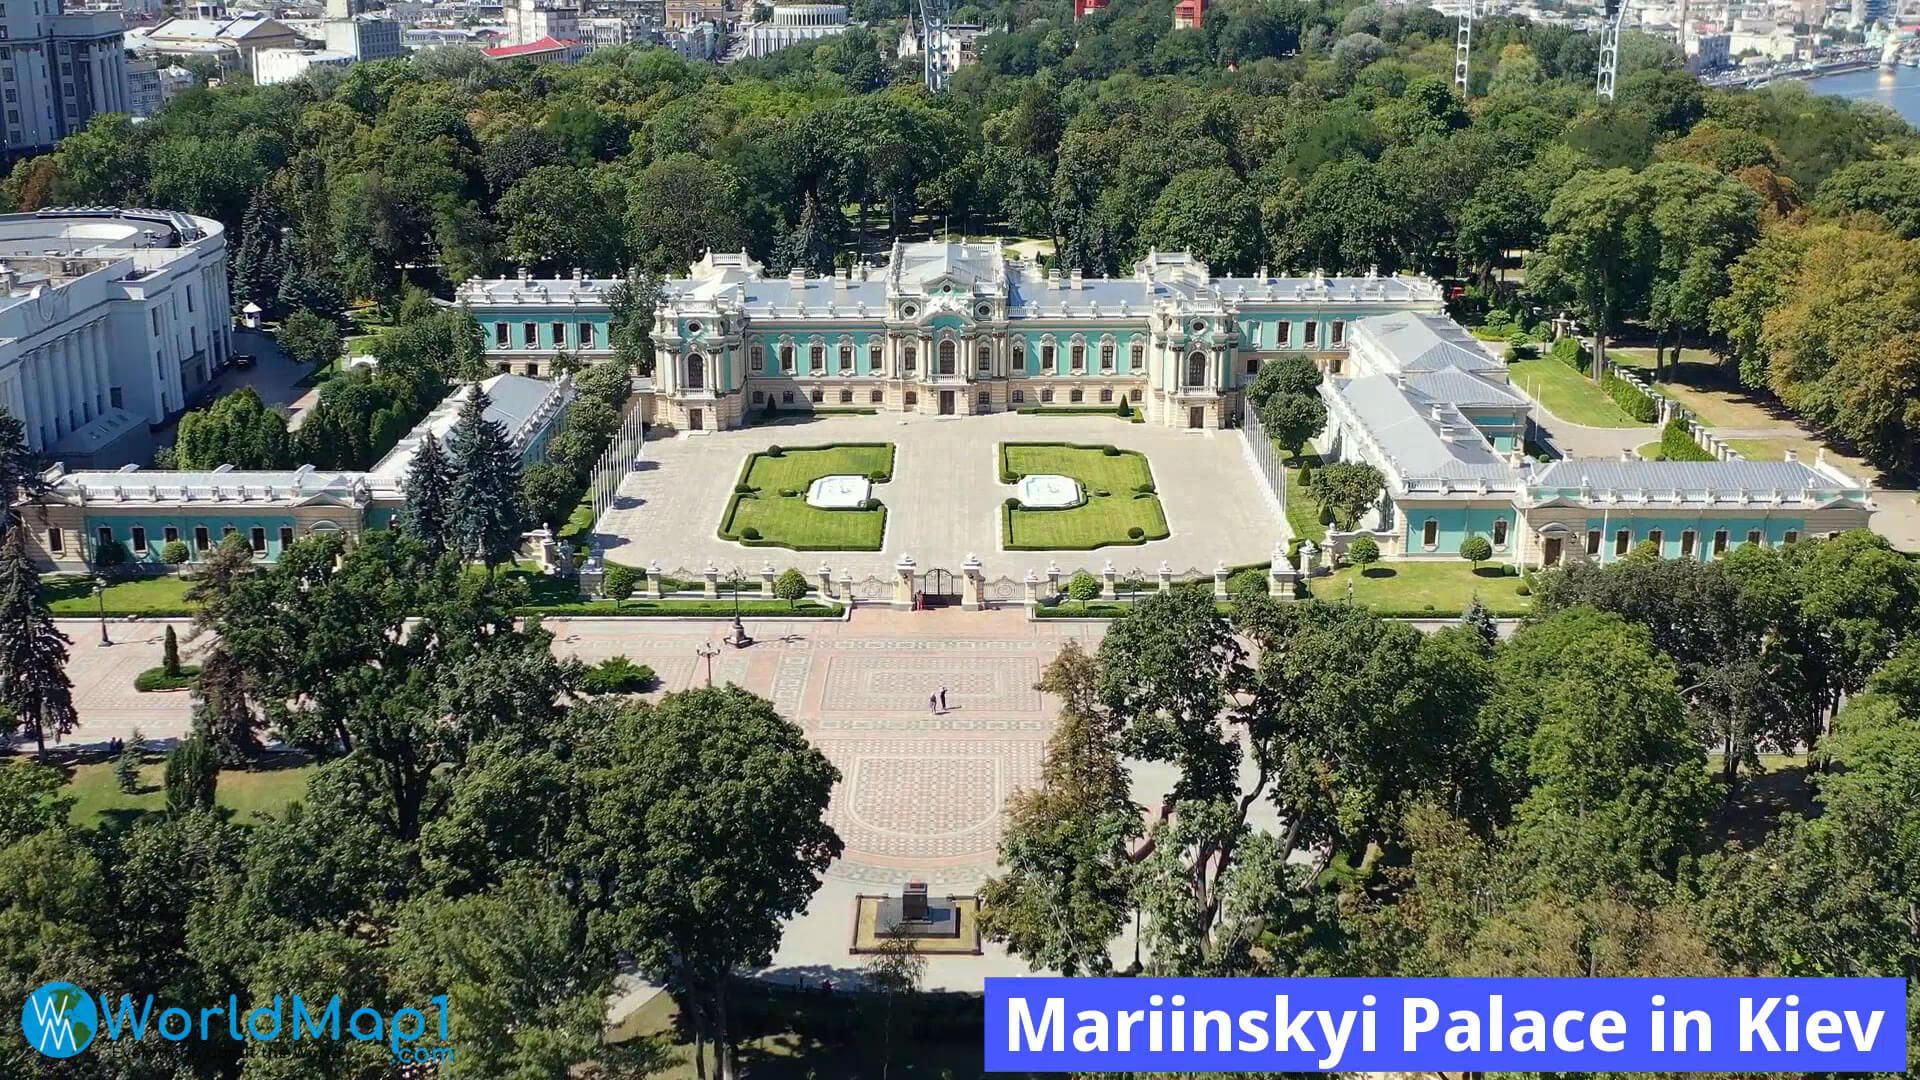 Mariinskyi Palace in Kiew